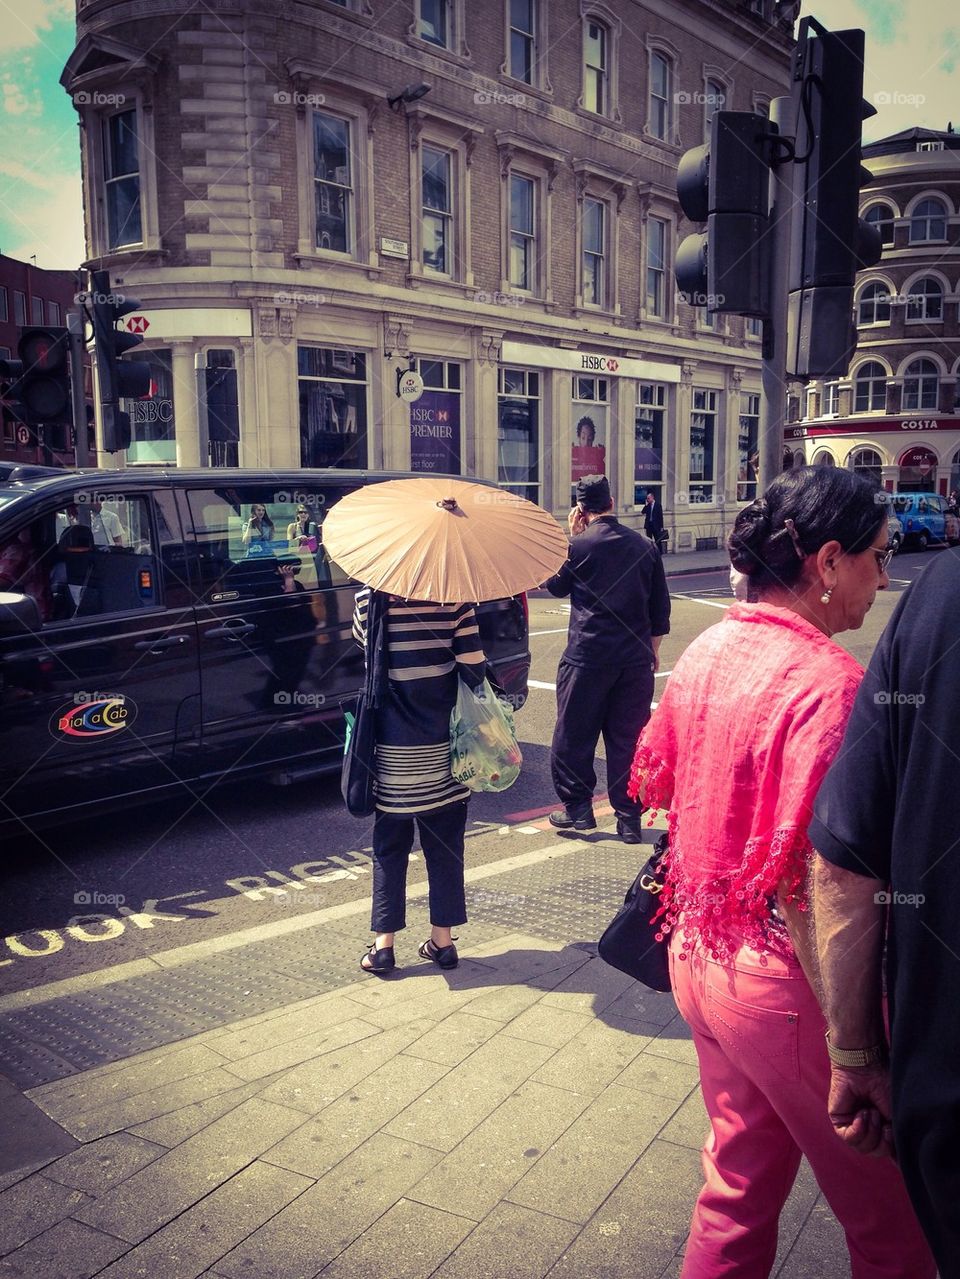 London umbrella